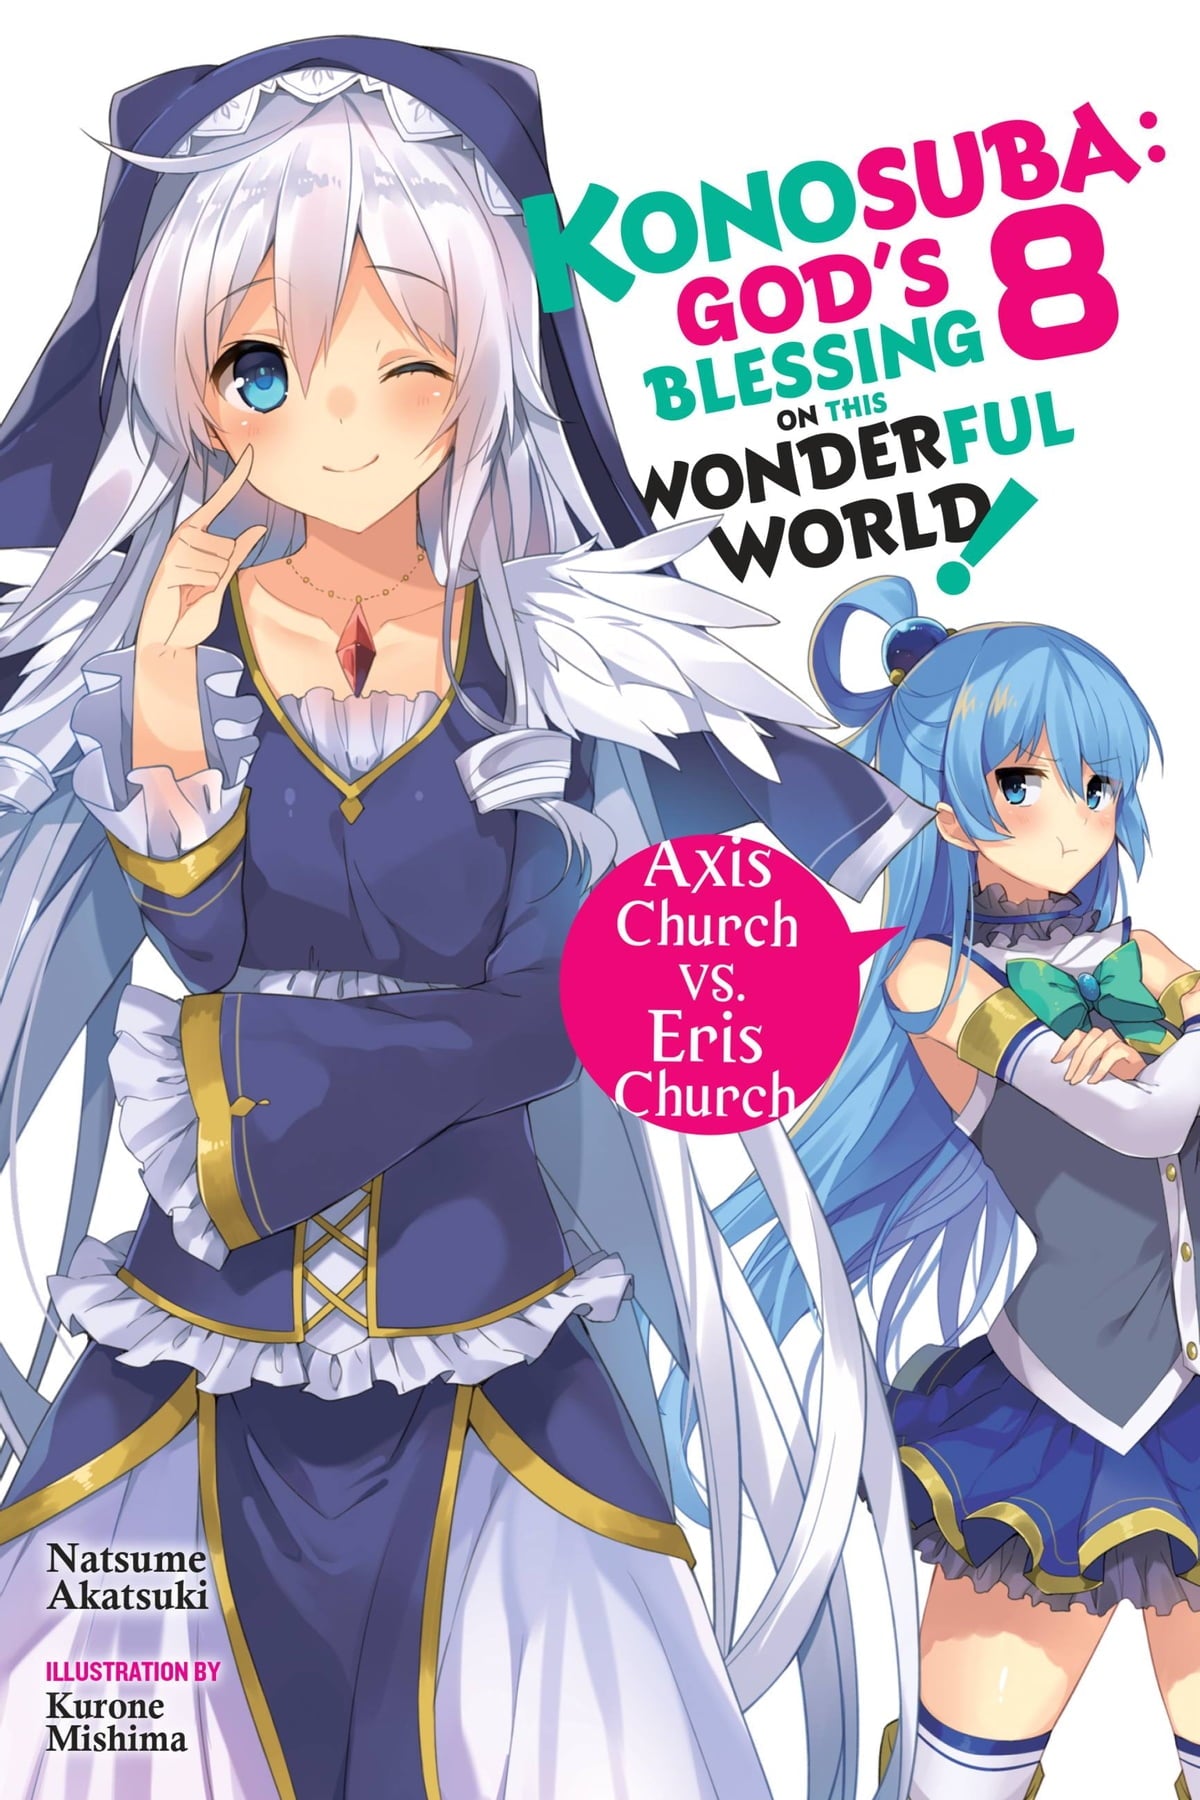 Konosuba: God's Blessing on This Wonderful World! Vol. 08 (Light Novel): Axis Church vs. Eris Church